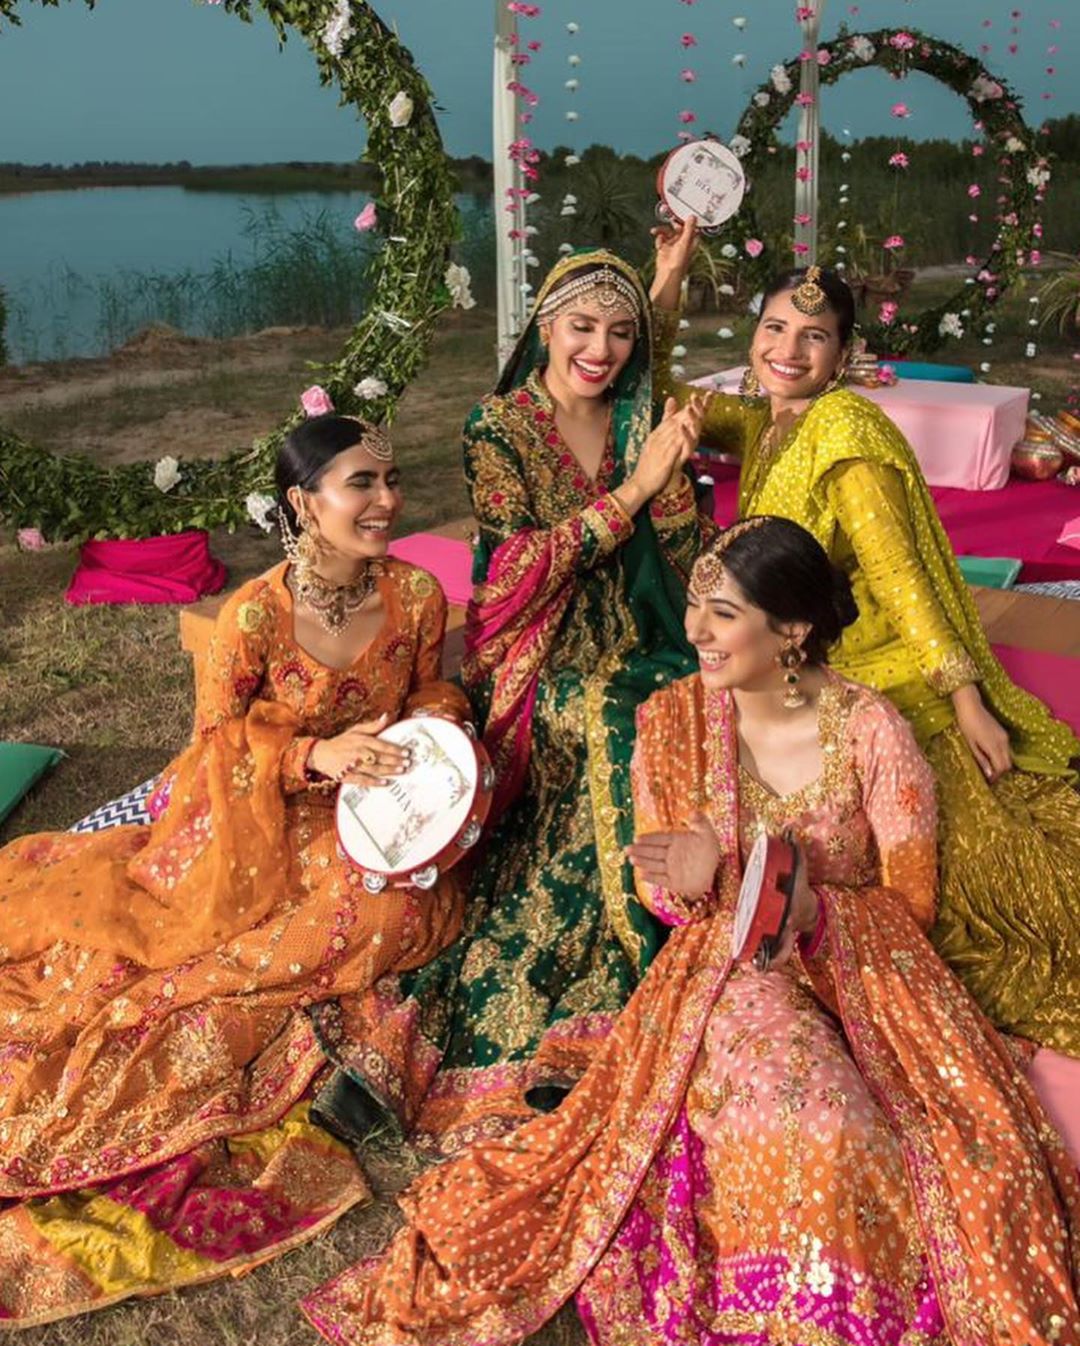 Ayeza Khan Looking Gorgeous in Beautiful Mehndi Dresses by Ansab Jhangir